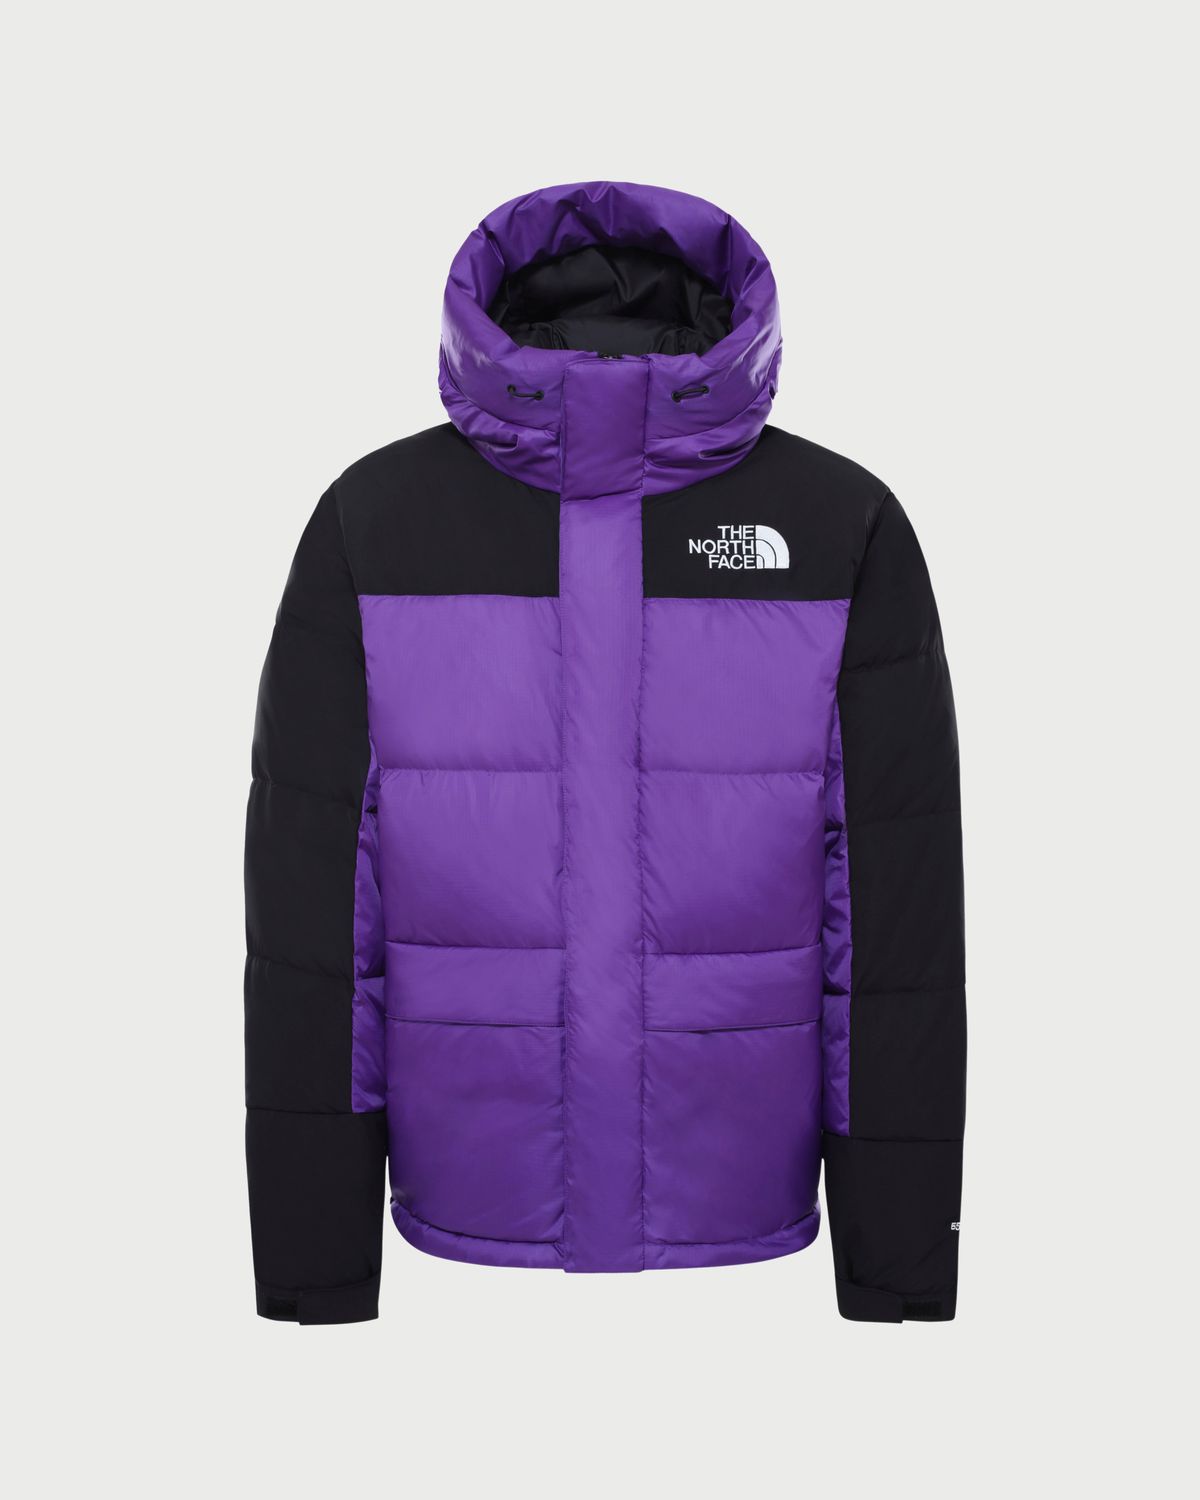 The North Face – Himalayan Down Jacket Peak Purple Unisex - Outerwear - Purple - Image 1